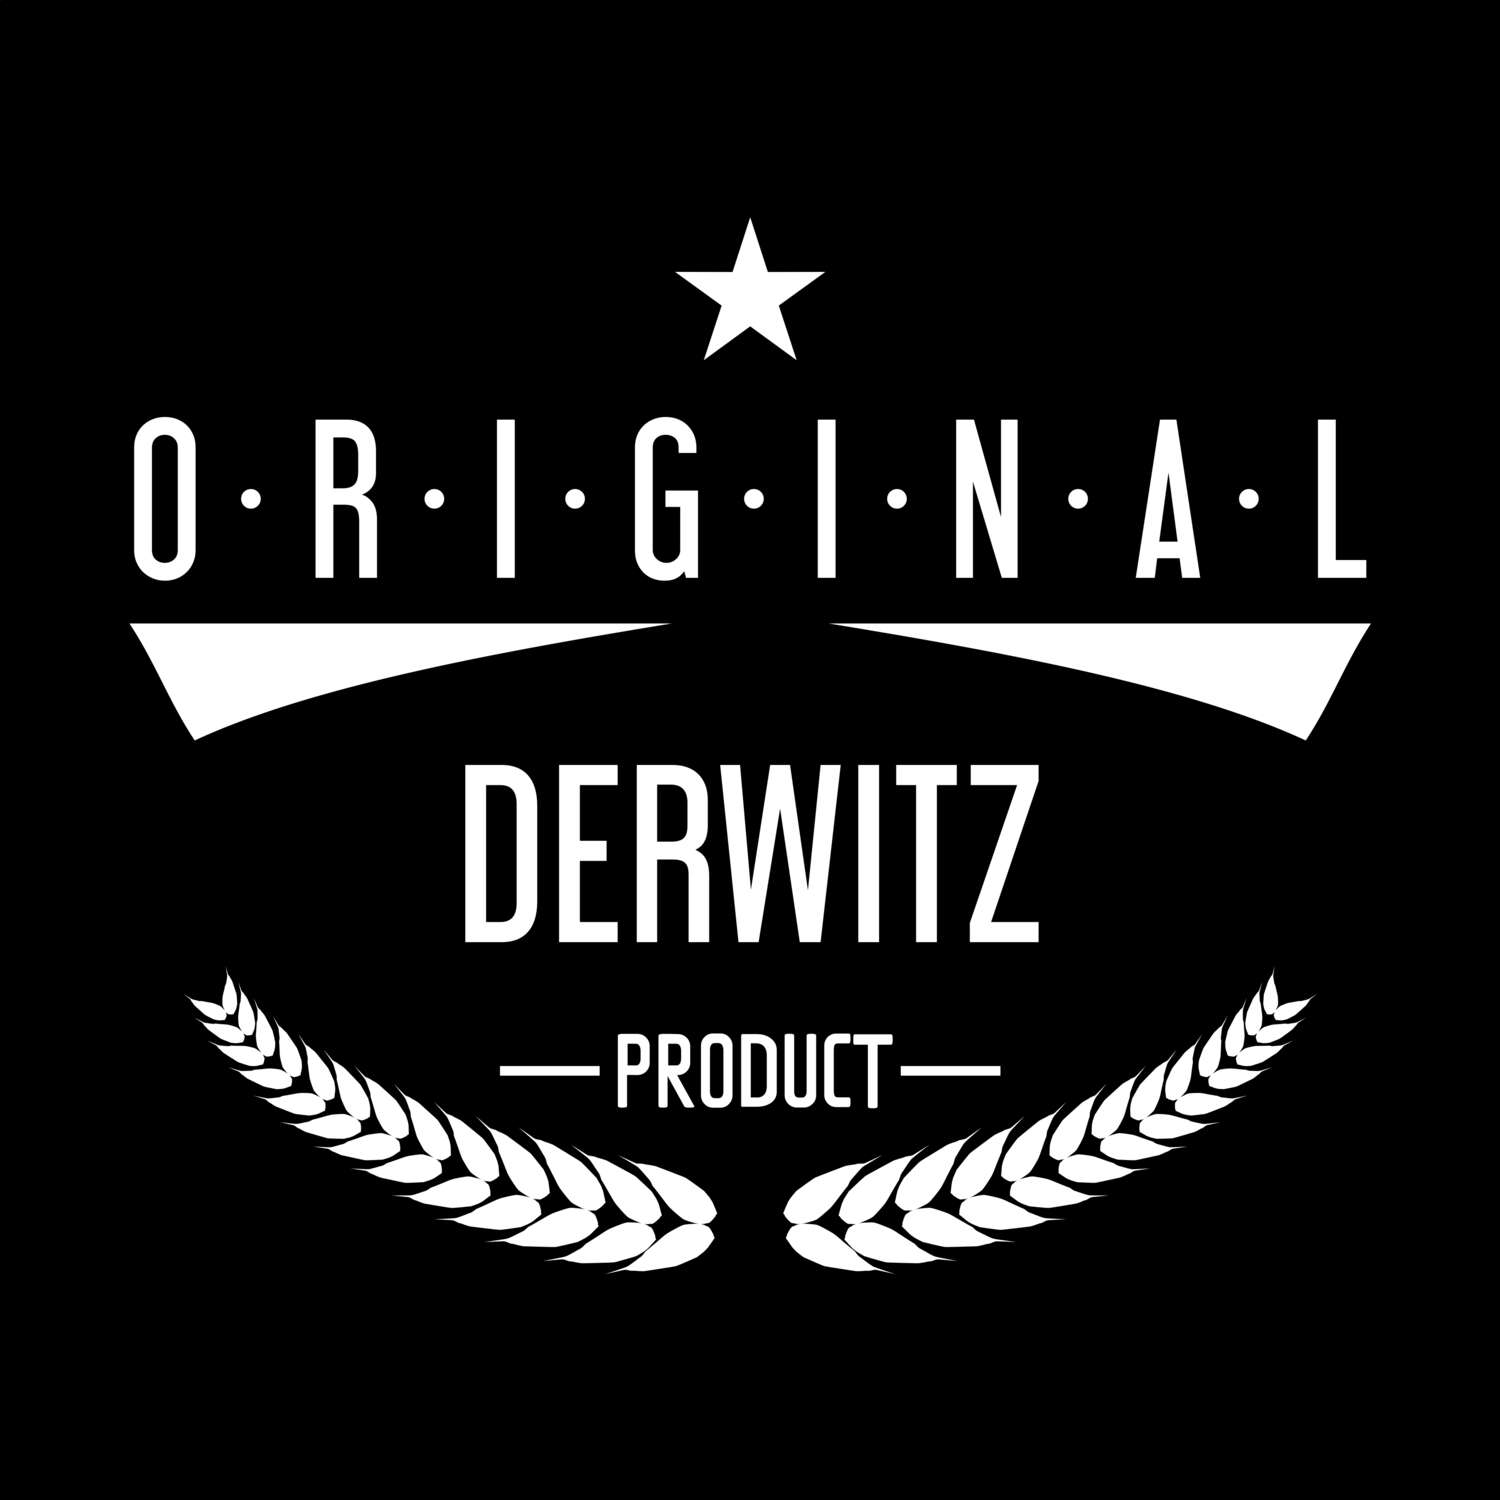 Derwitz T-Shirt »Original Product«